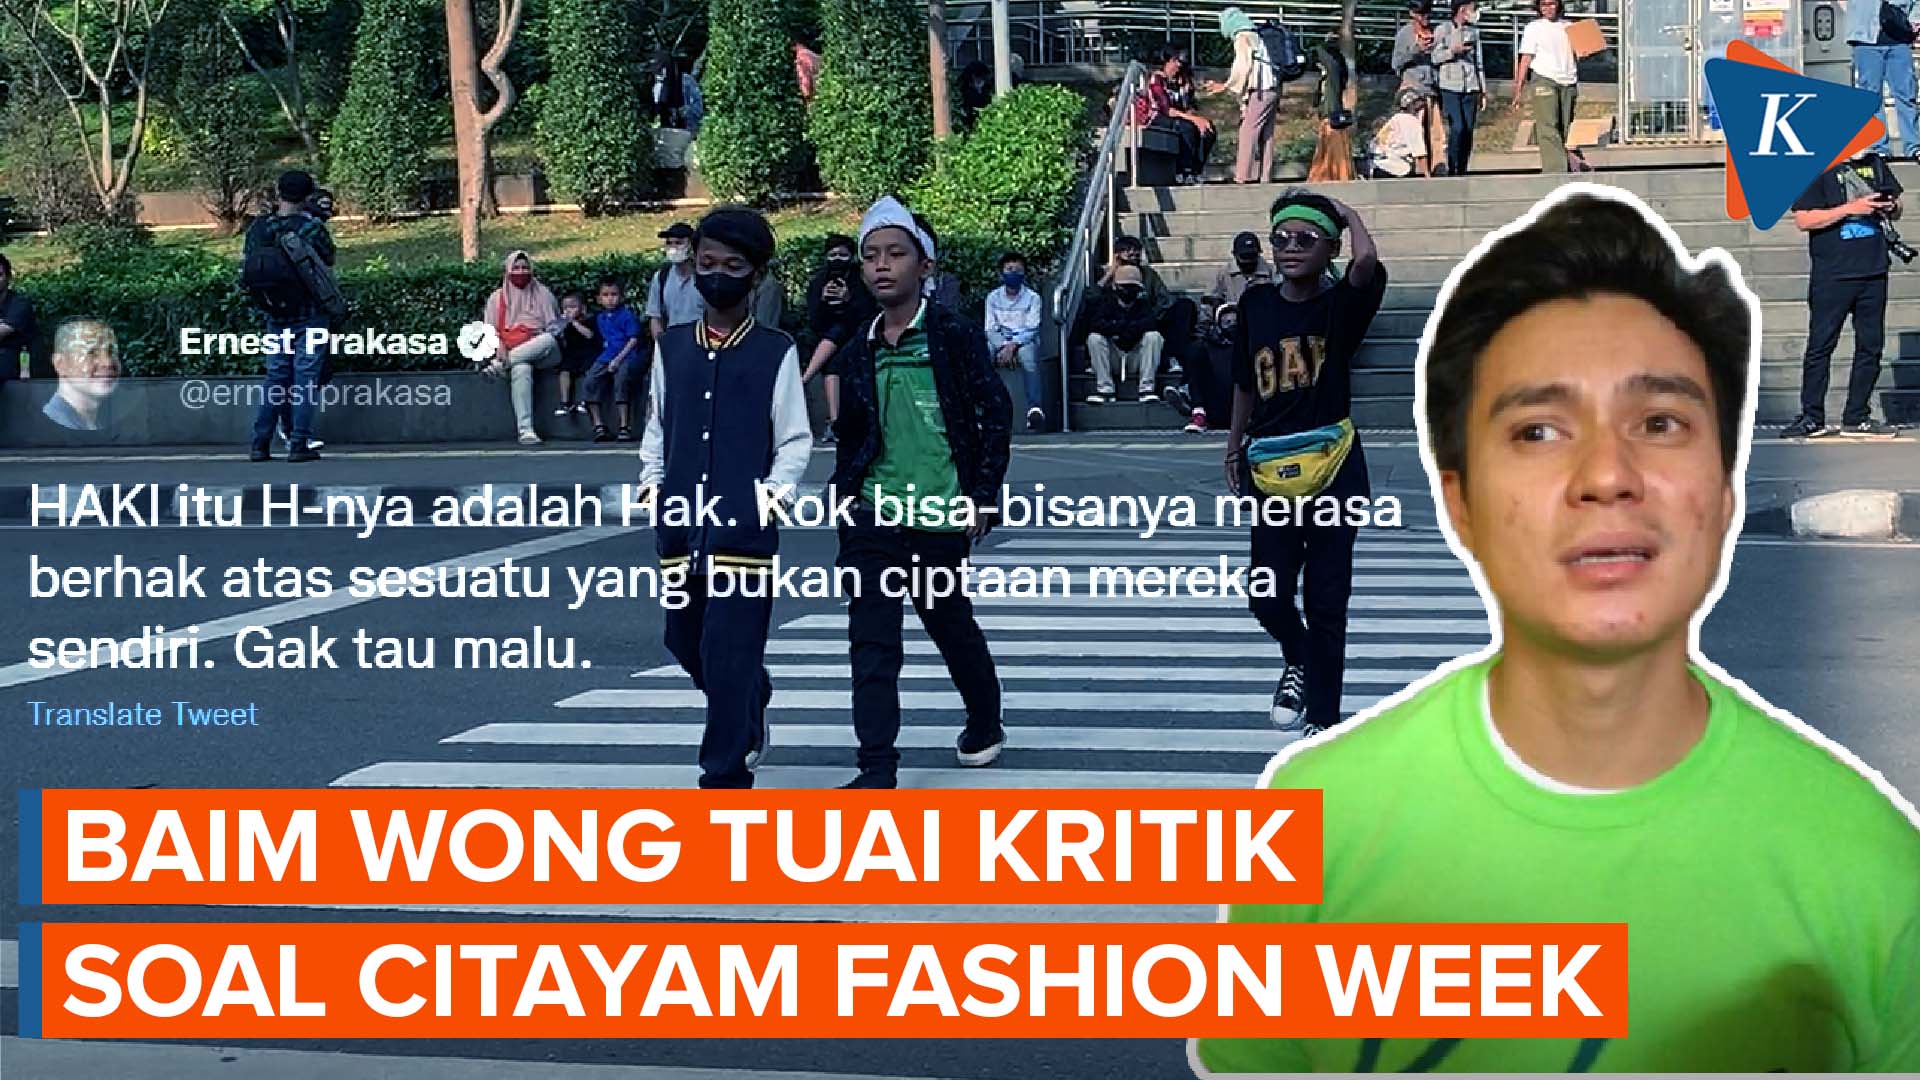 Daftarkan Merek Citayam Fashion Week, Baim Wong Banjir Kritikan Masyarakat